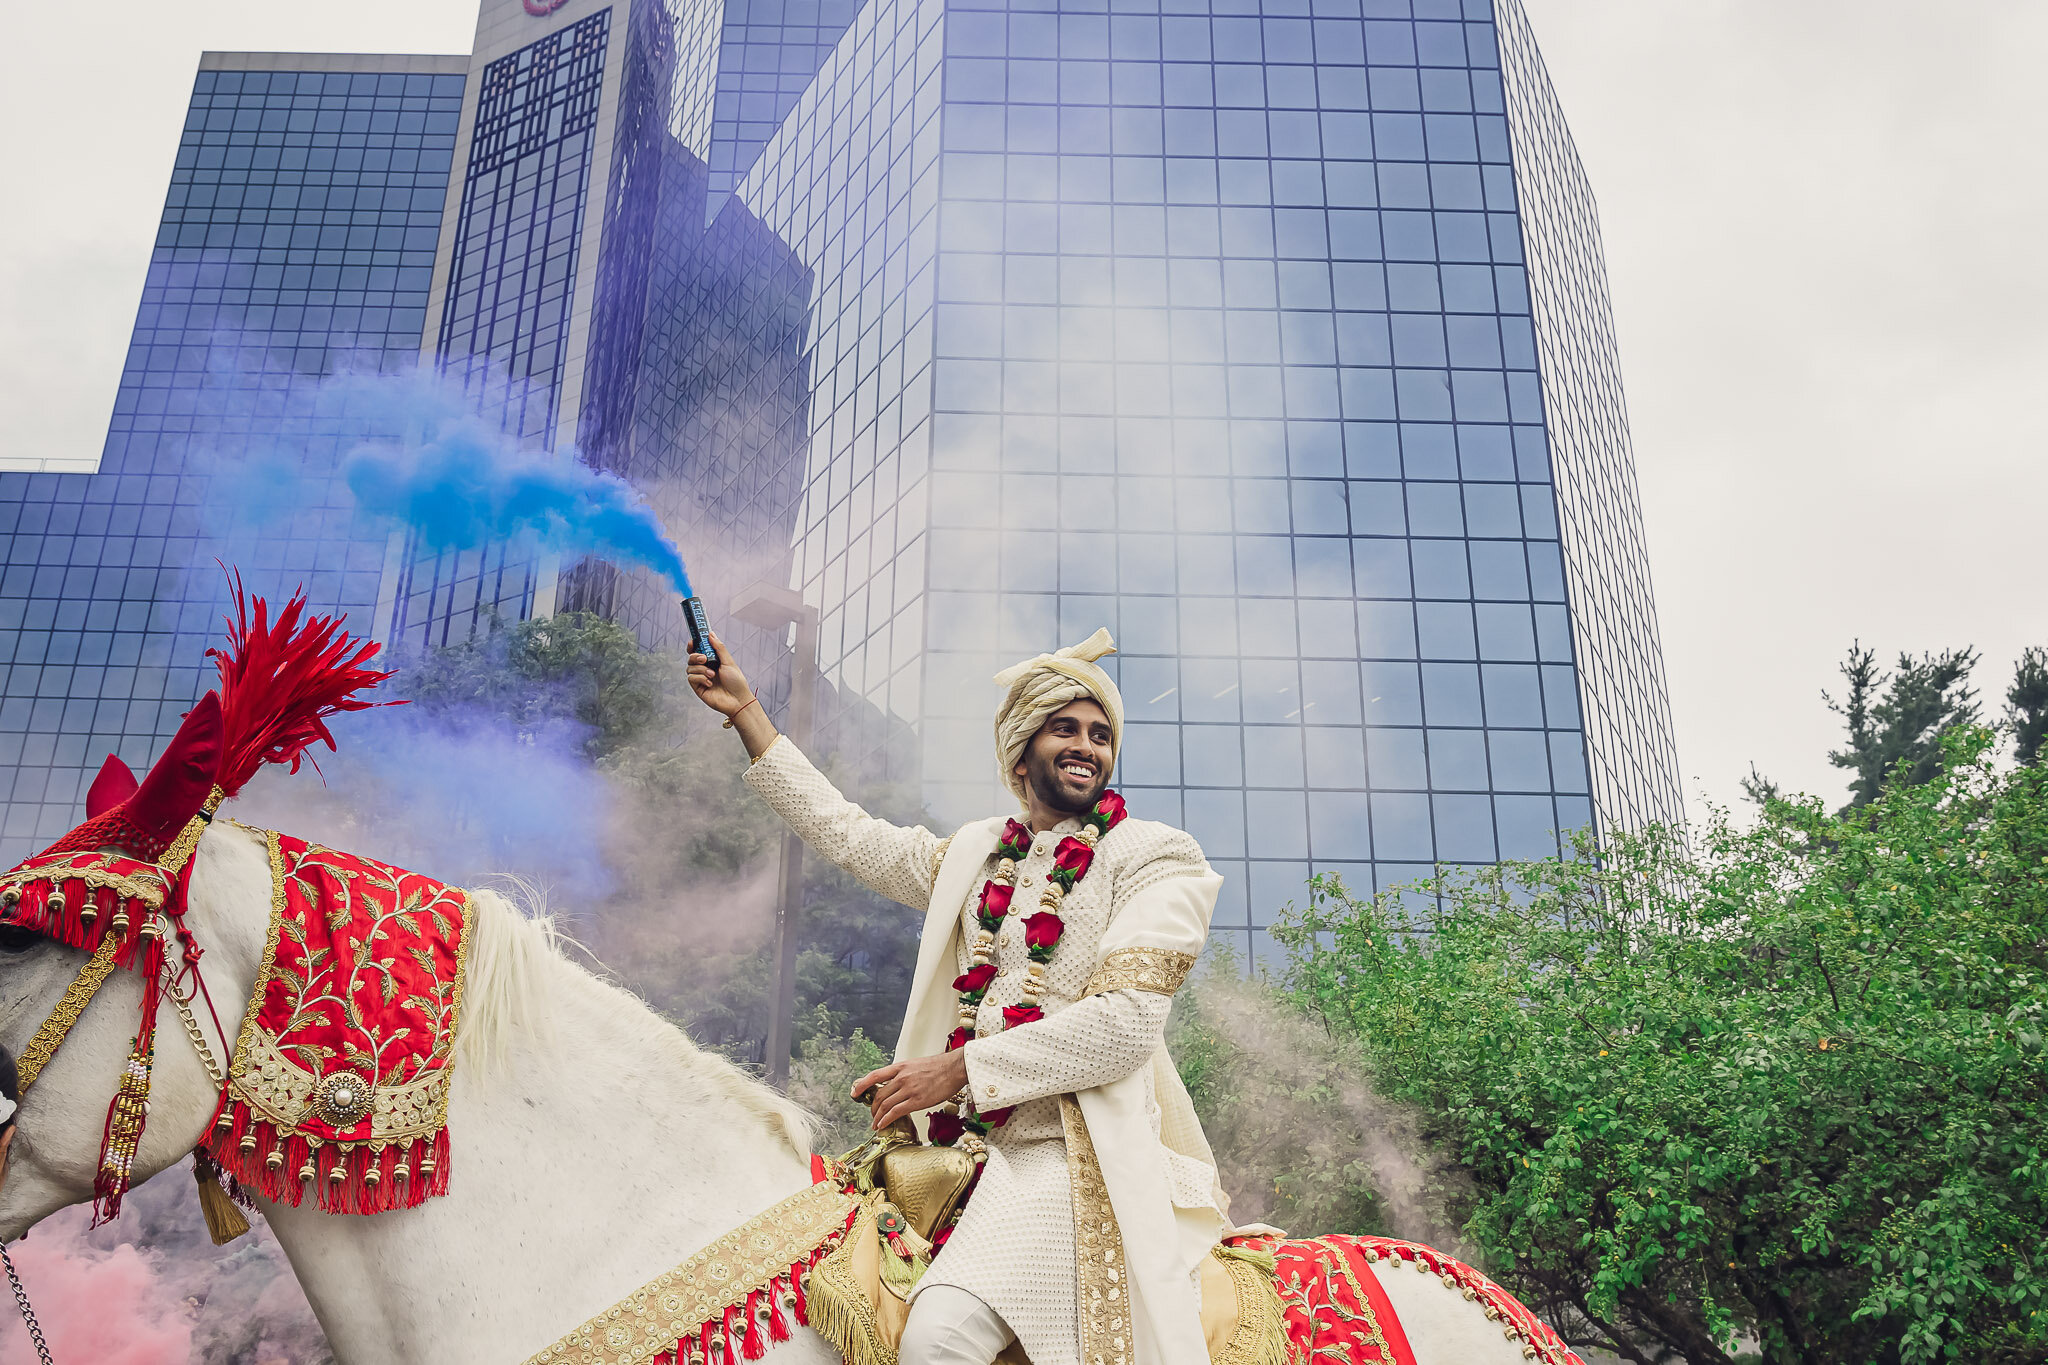 Sheraton Mahwah Hotel Indian wedding baraat procession